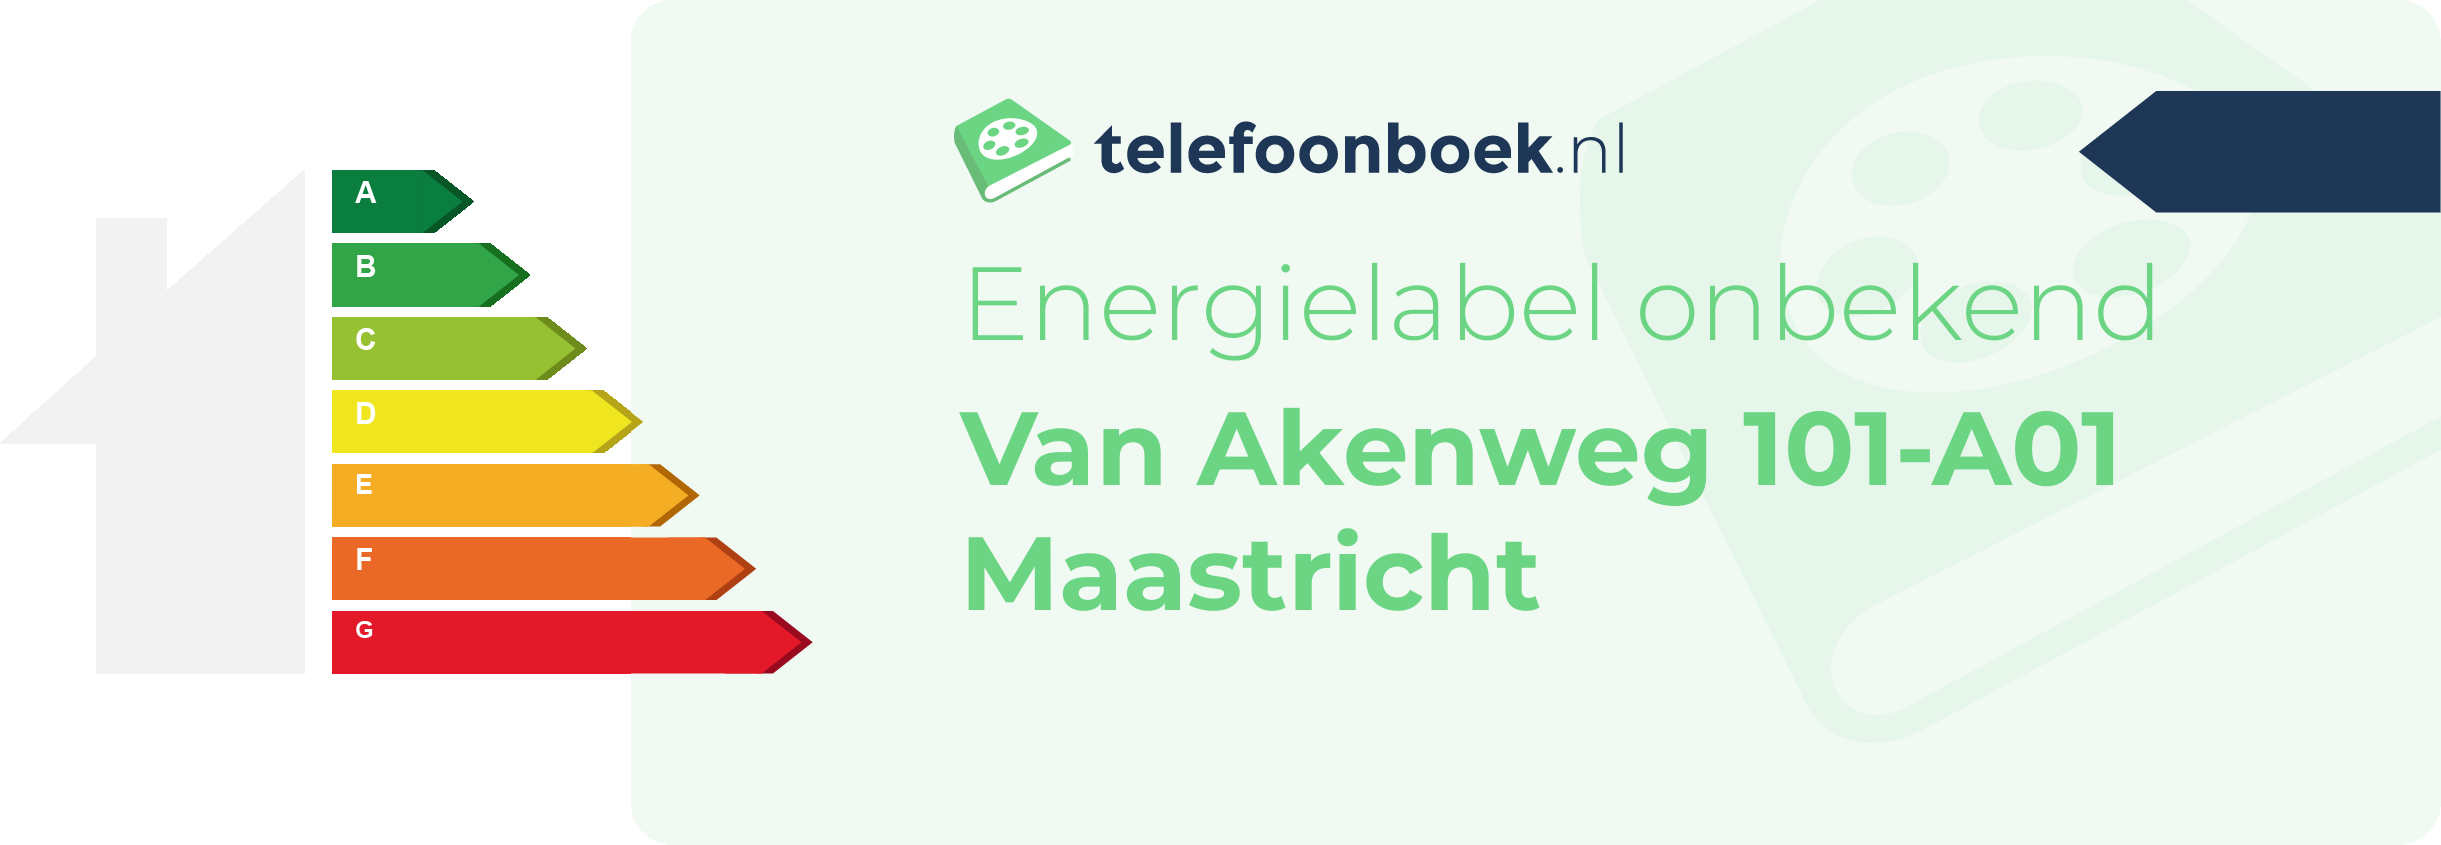 Energielabel Van Akenweg 101-A01 Maastricht